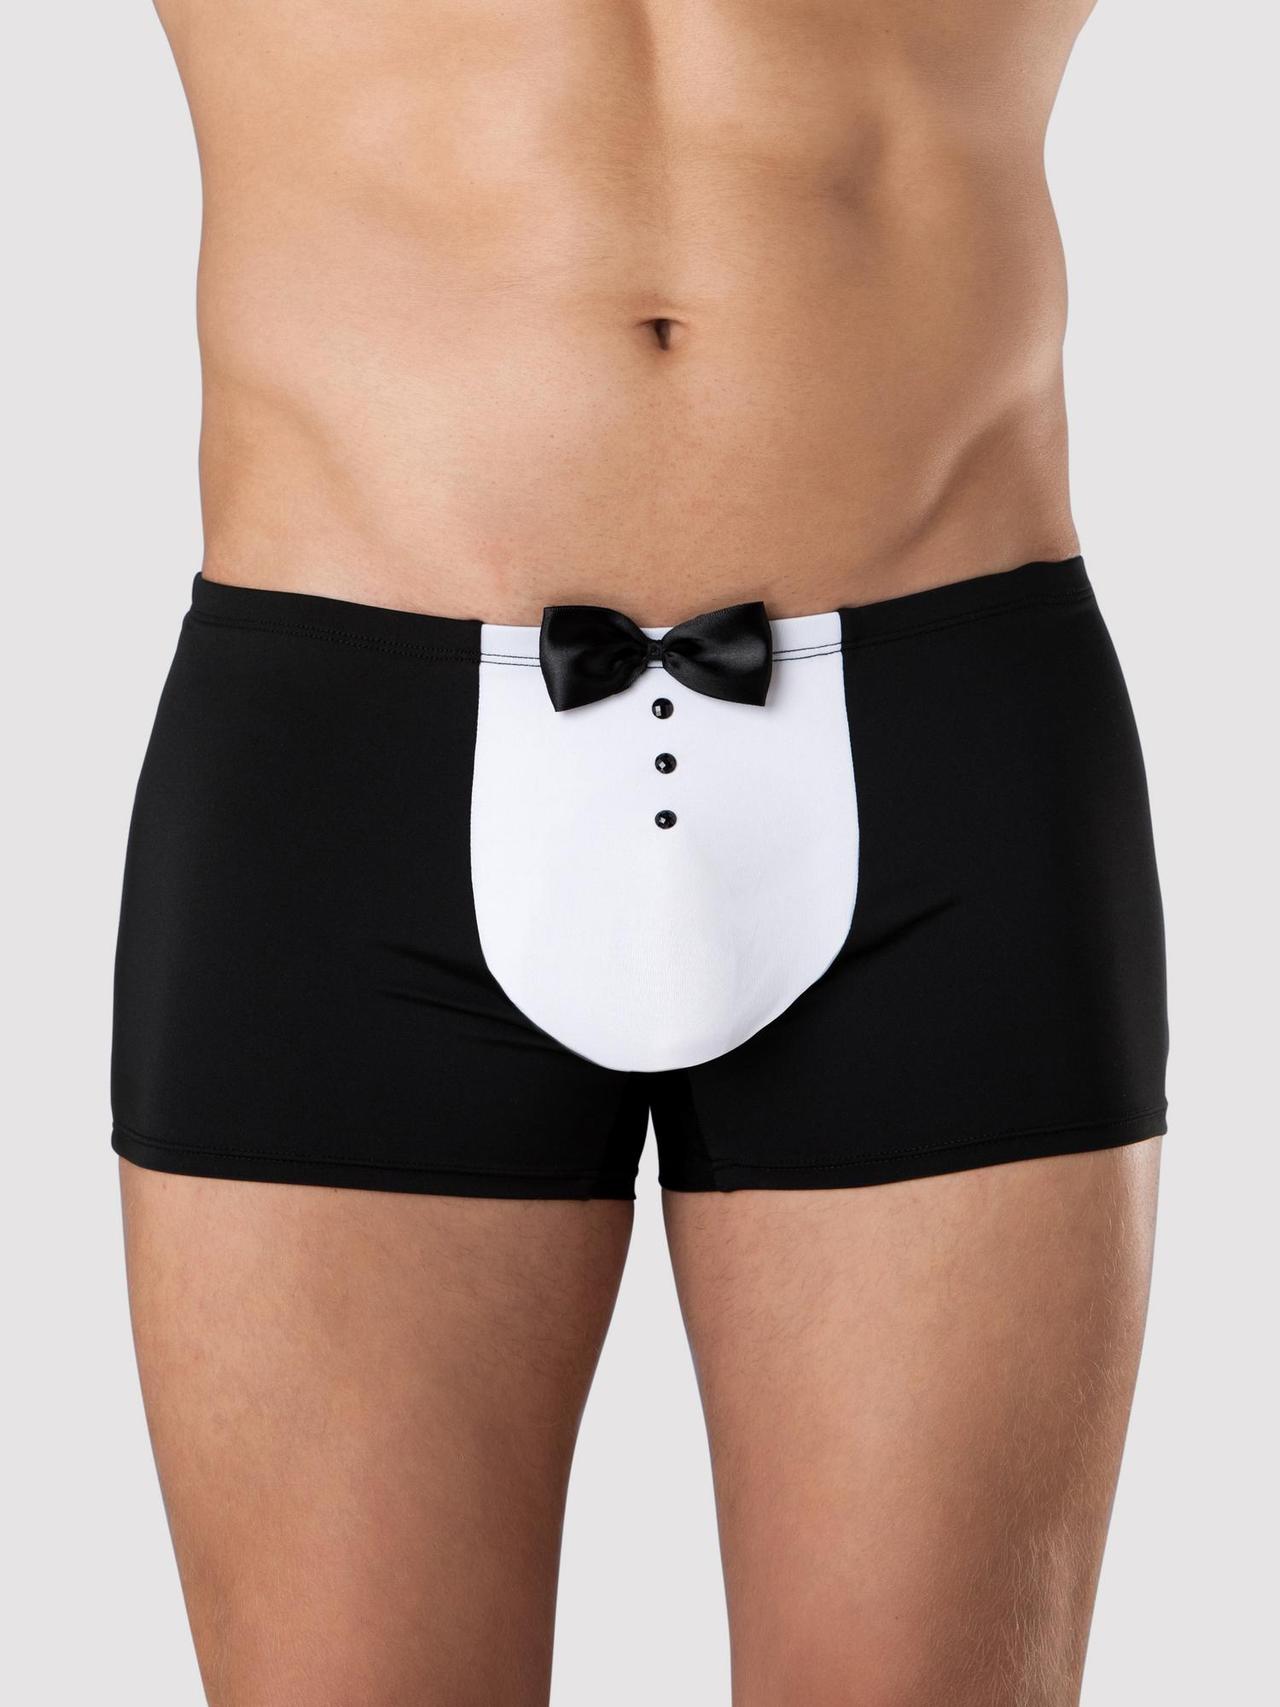 The Best Groom Underwear for the Wedding & Honeymoon